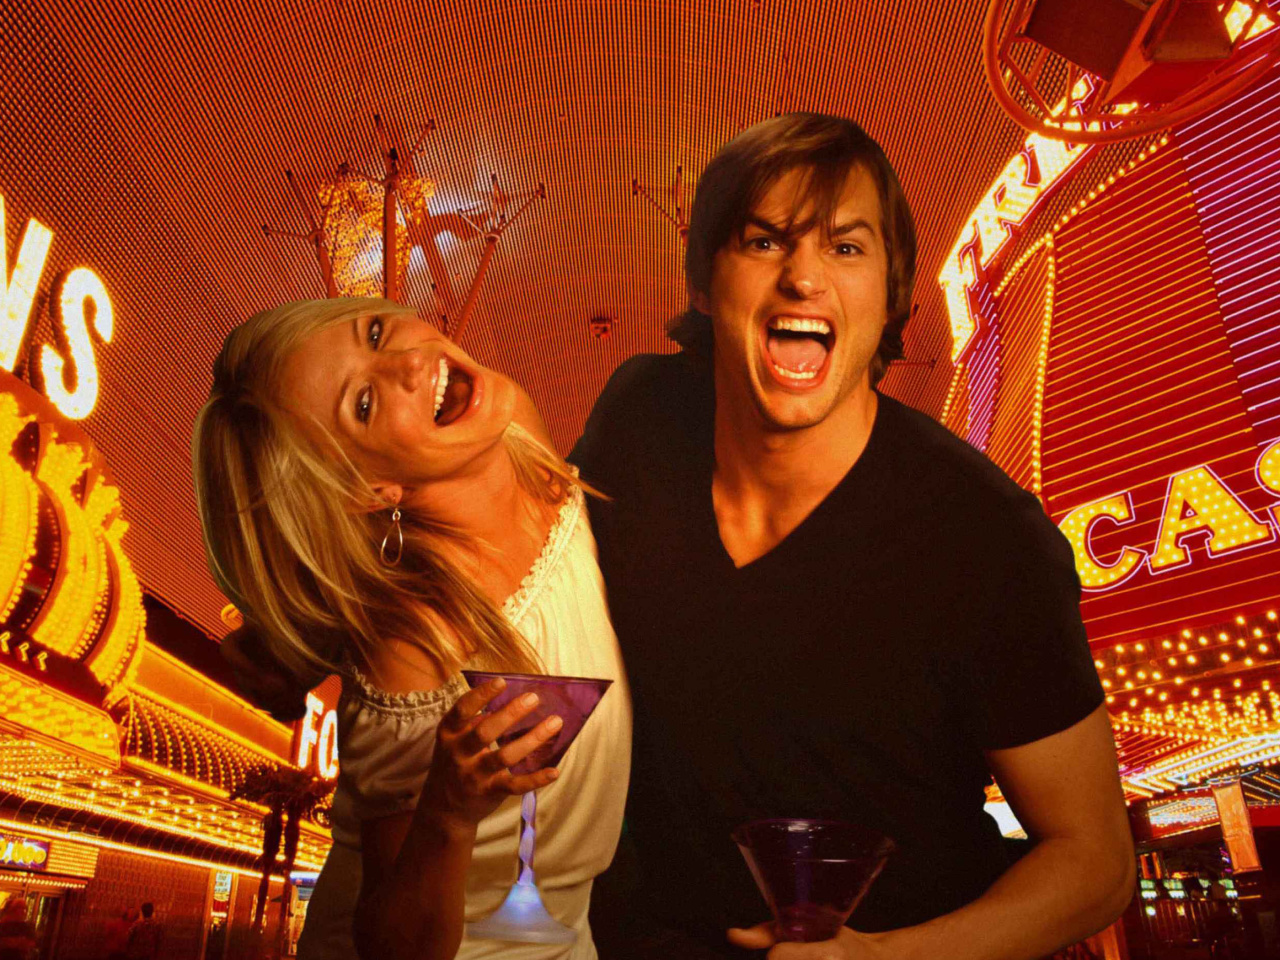 Das Cameron Diaz And Ashton Kutcher in What Happens in Vegas Wallpaper 1280x960